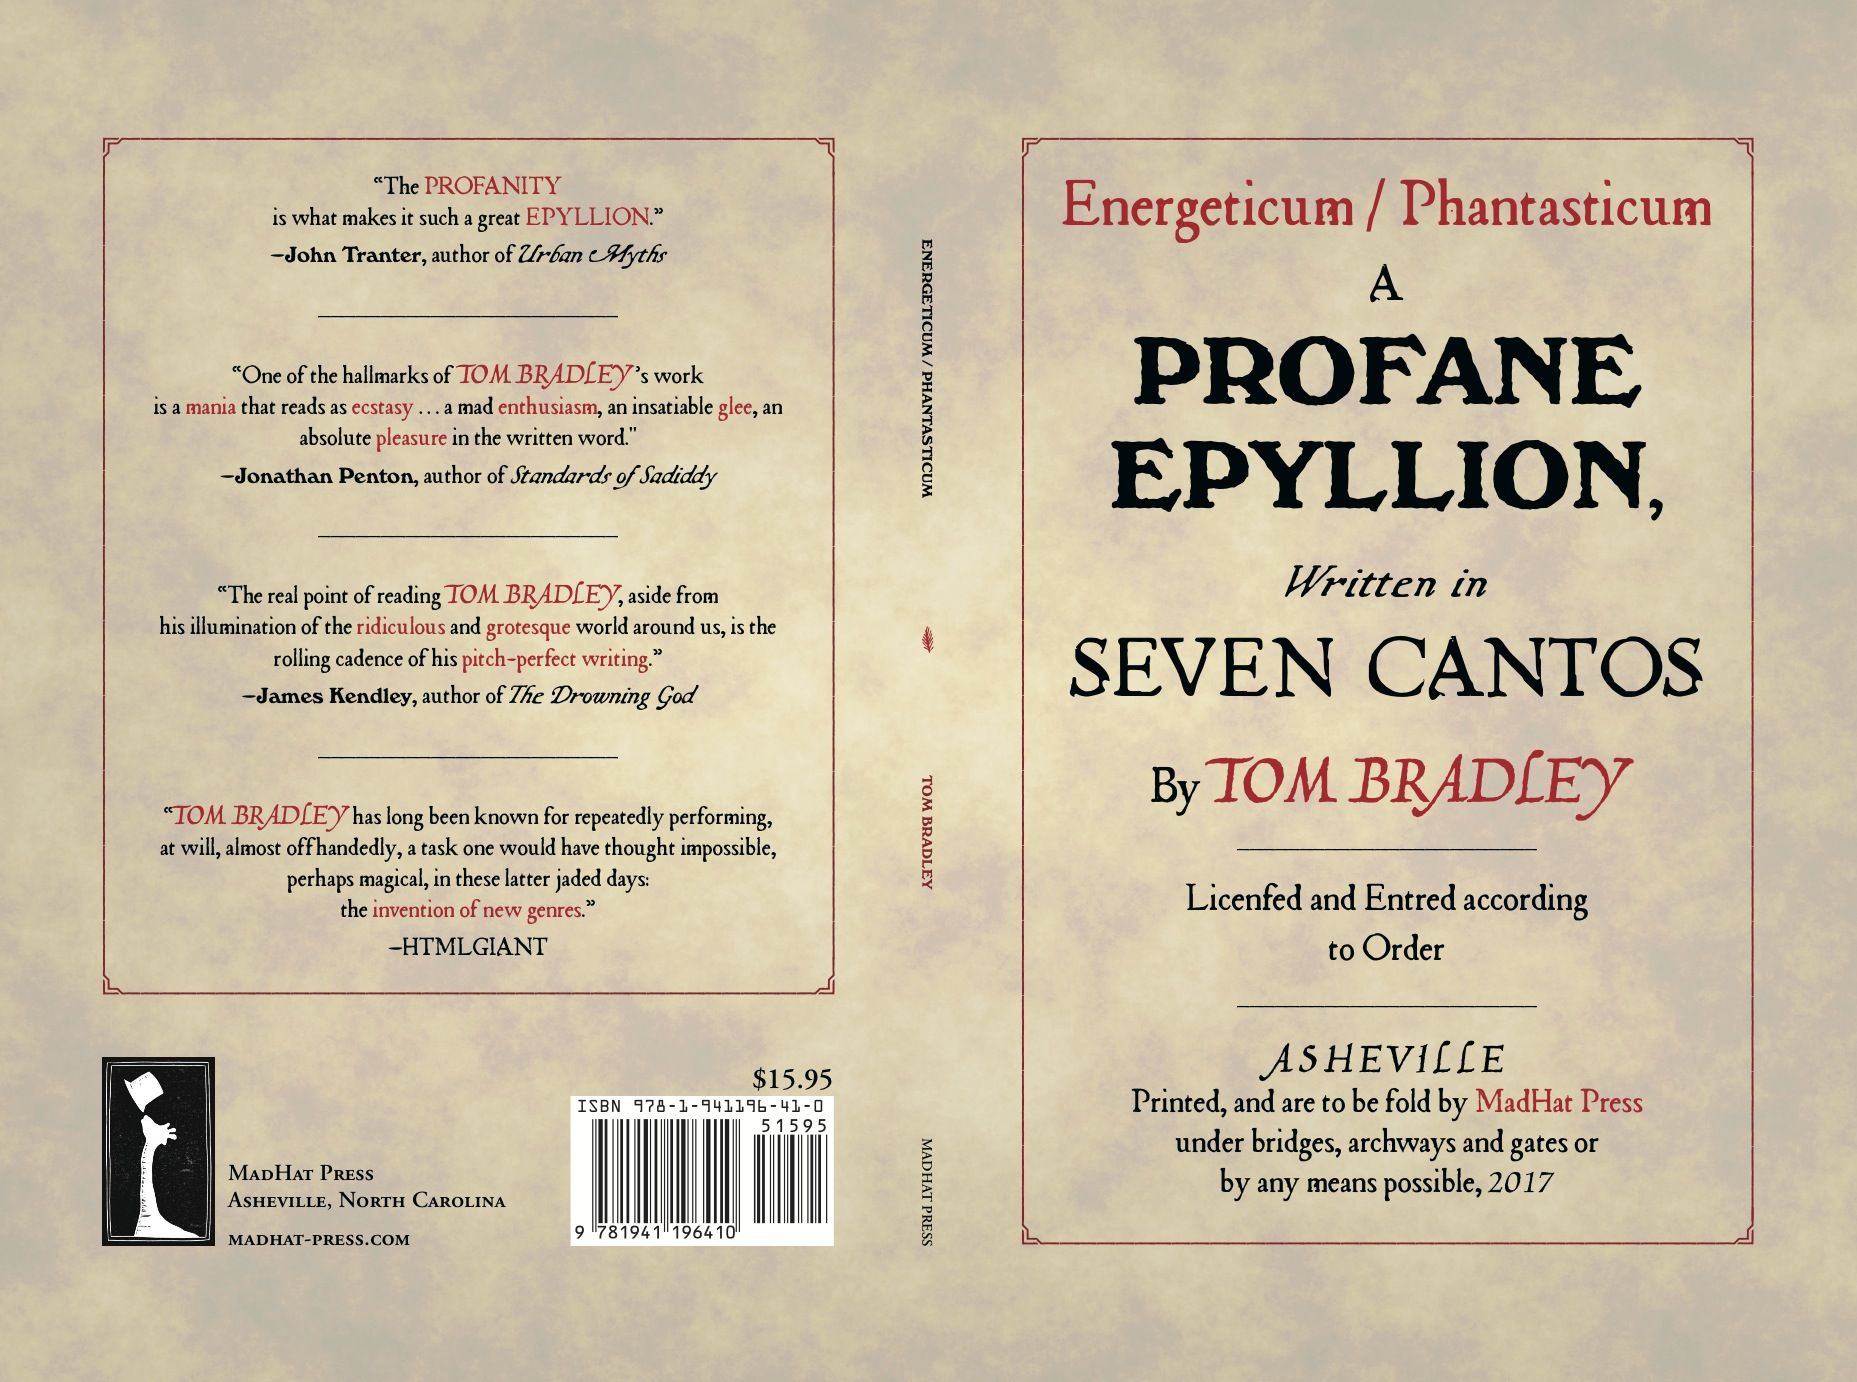 Energeticum - Phantasticum, A Profane Epyllion, written in seven cantos by Tom Bradley